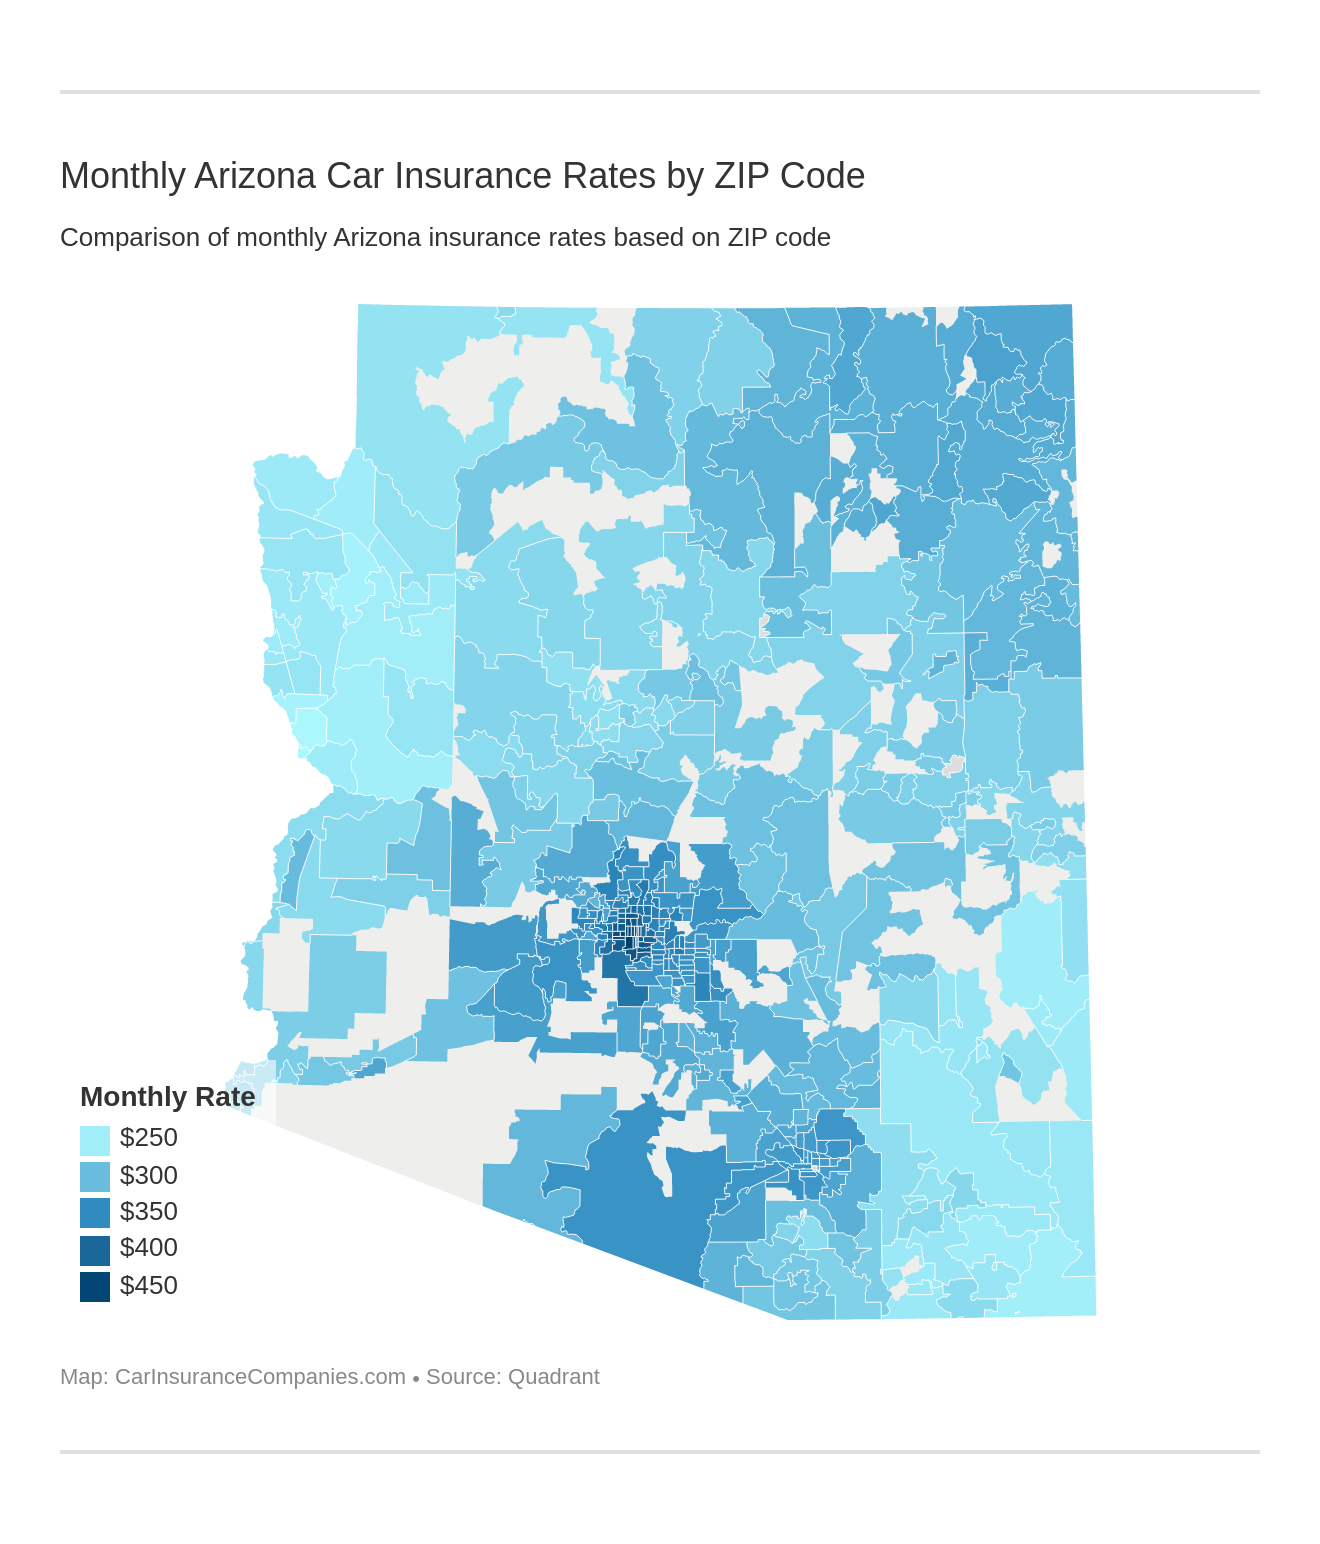 Arizona Car Insurance (Coverage, Companies, & More)